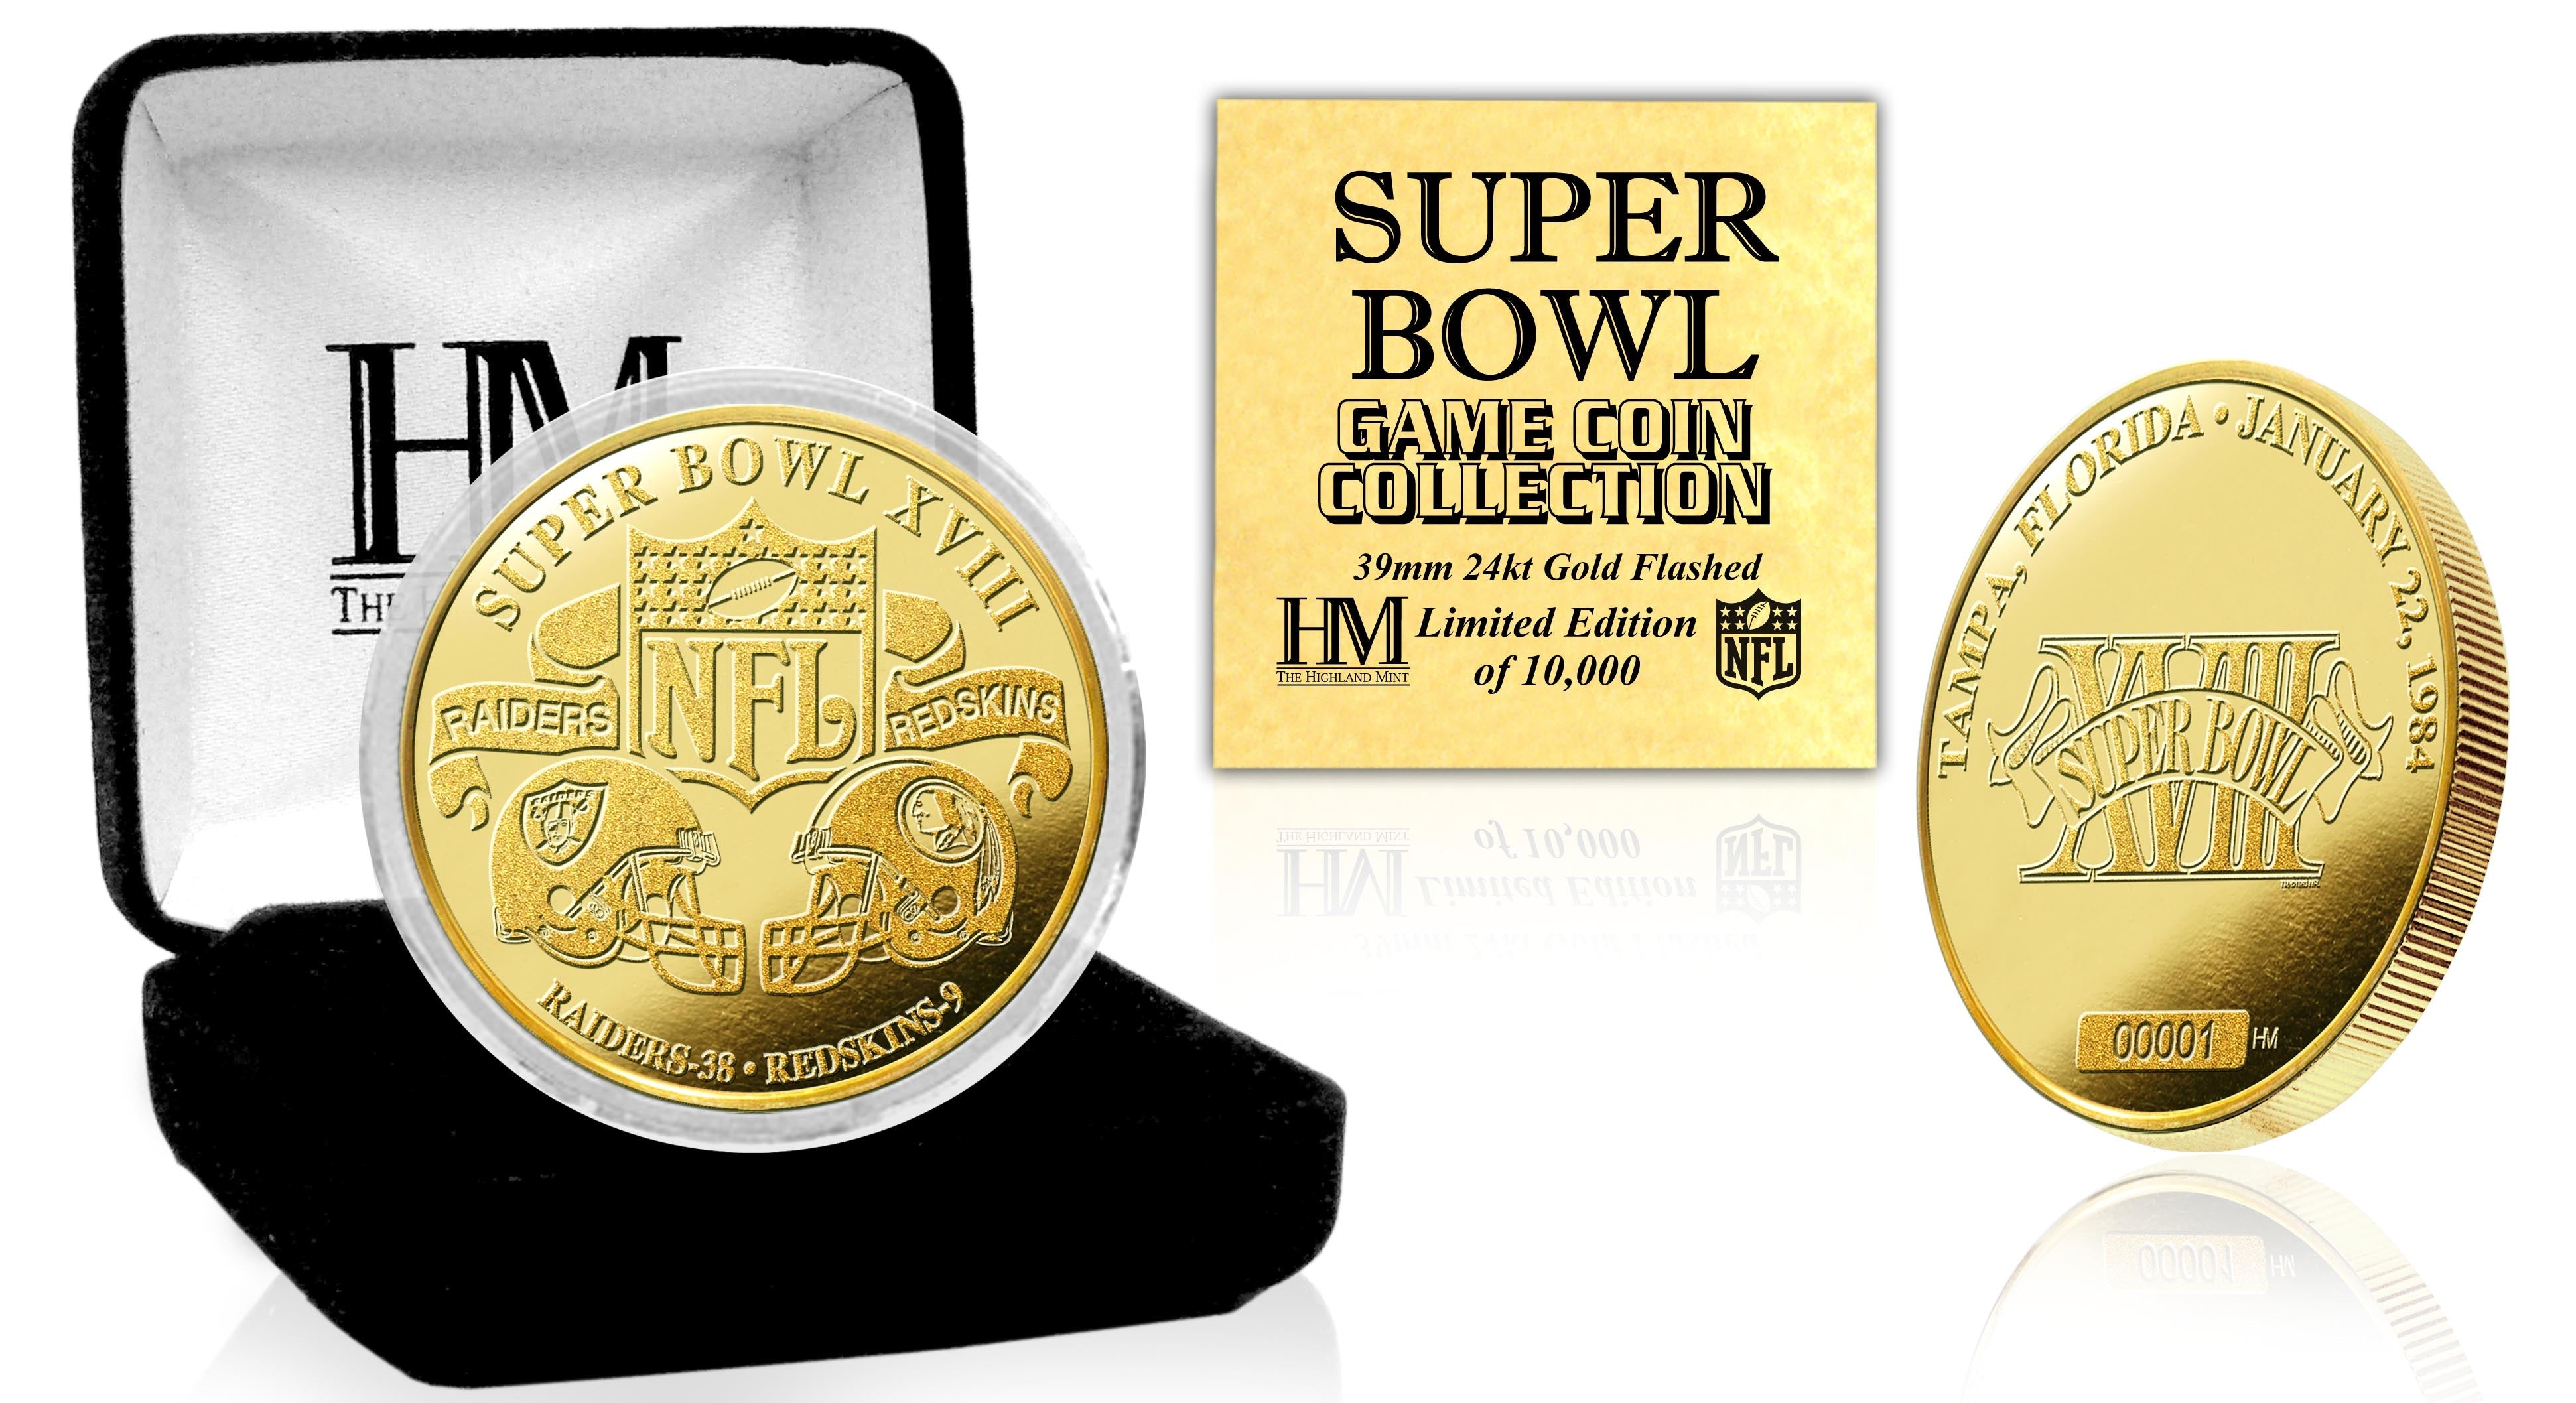 Super Bowl XVIII 24kt Gold Flip Coin